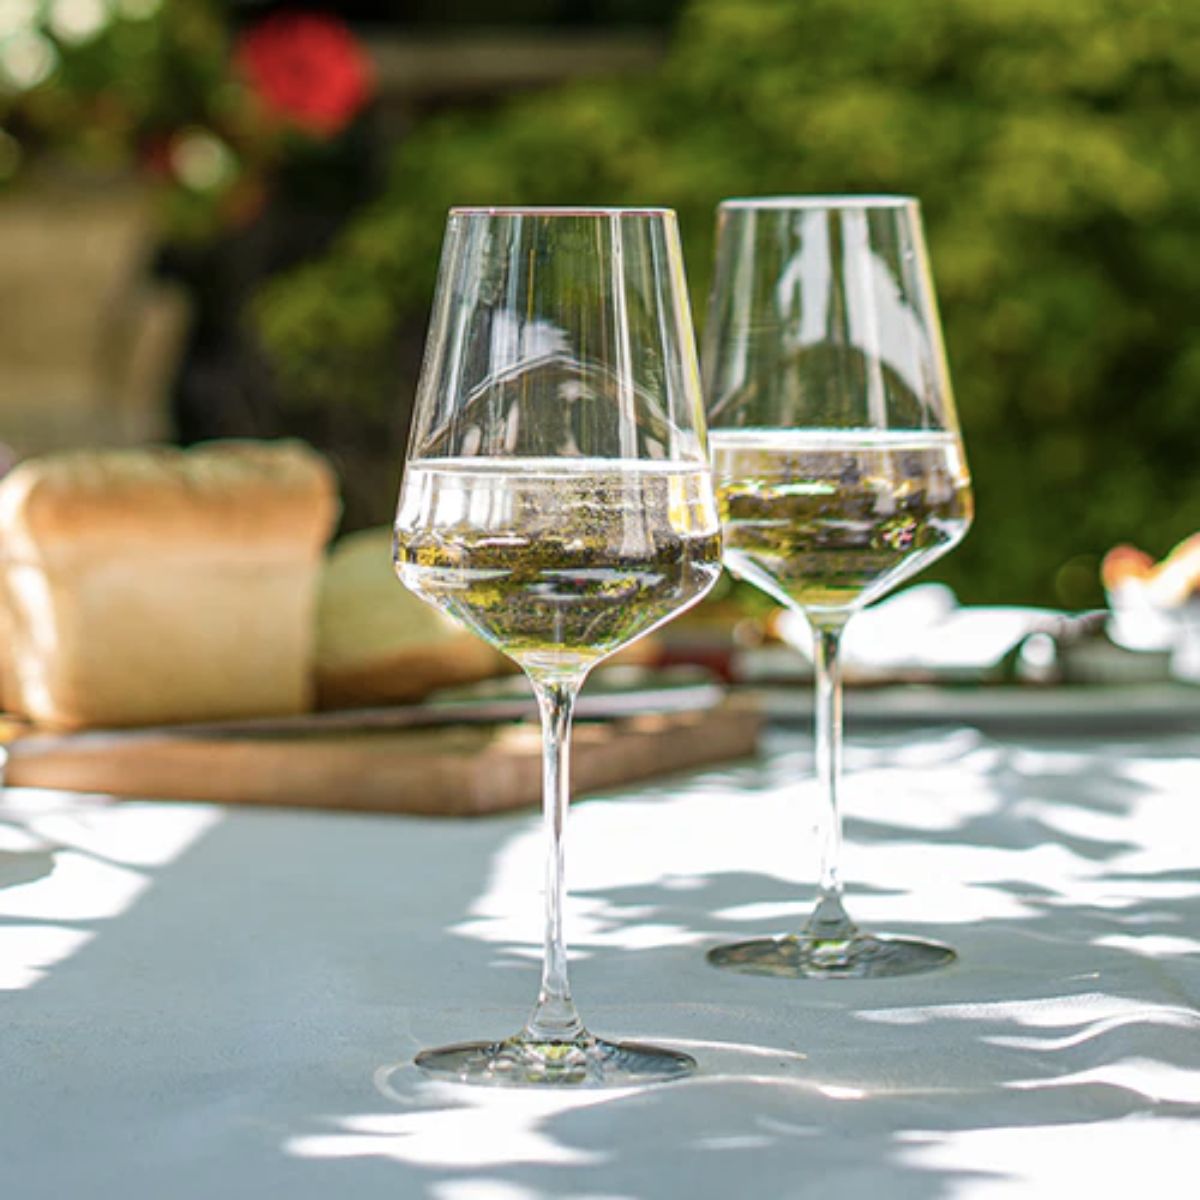 Darling Cellars Sauvignon Blanc - Dealcoholised White Wine